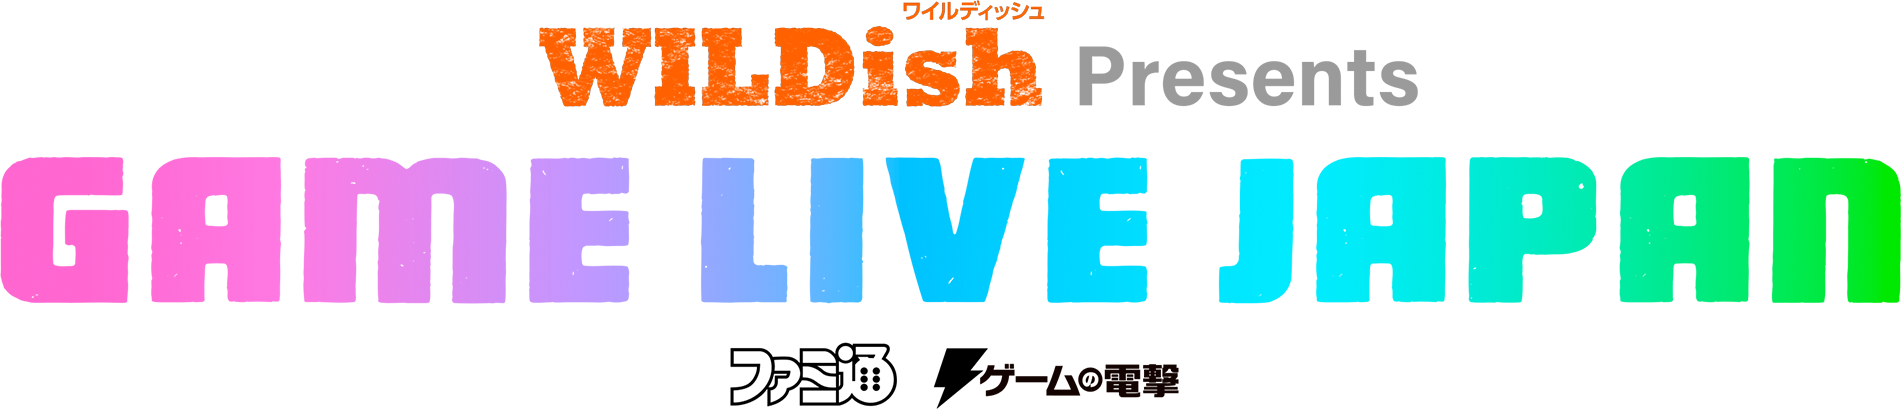 WILDish Presents GAME LIVE JAPAN With ファミ通・電撃ゲームアワード 特設サイト